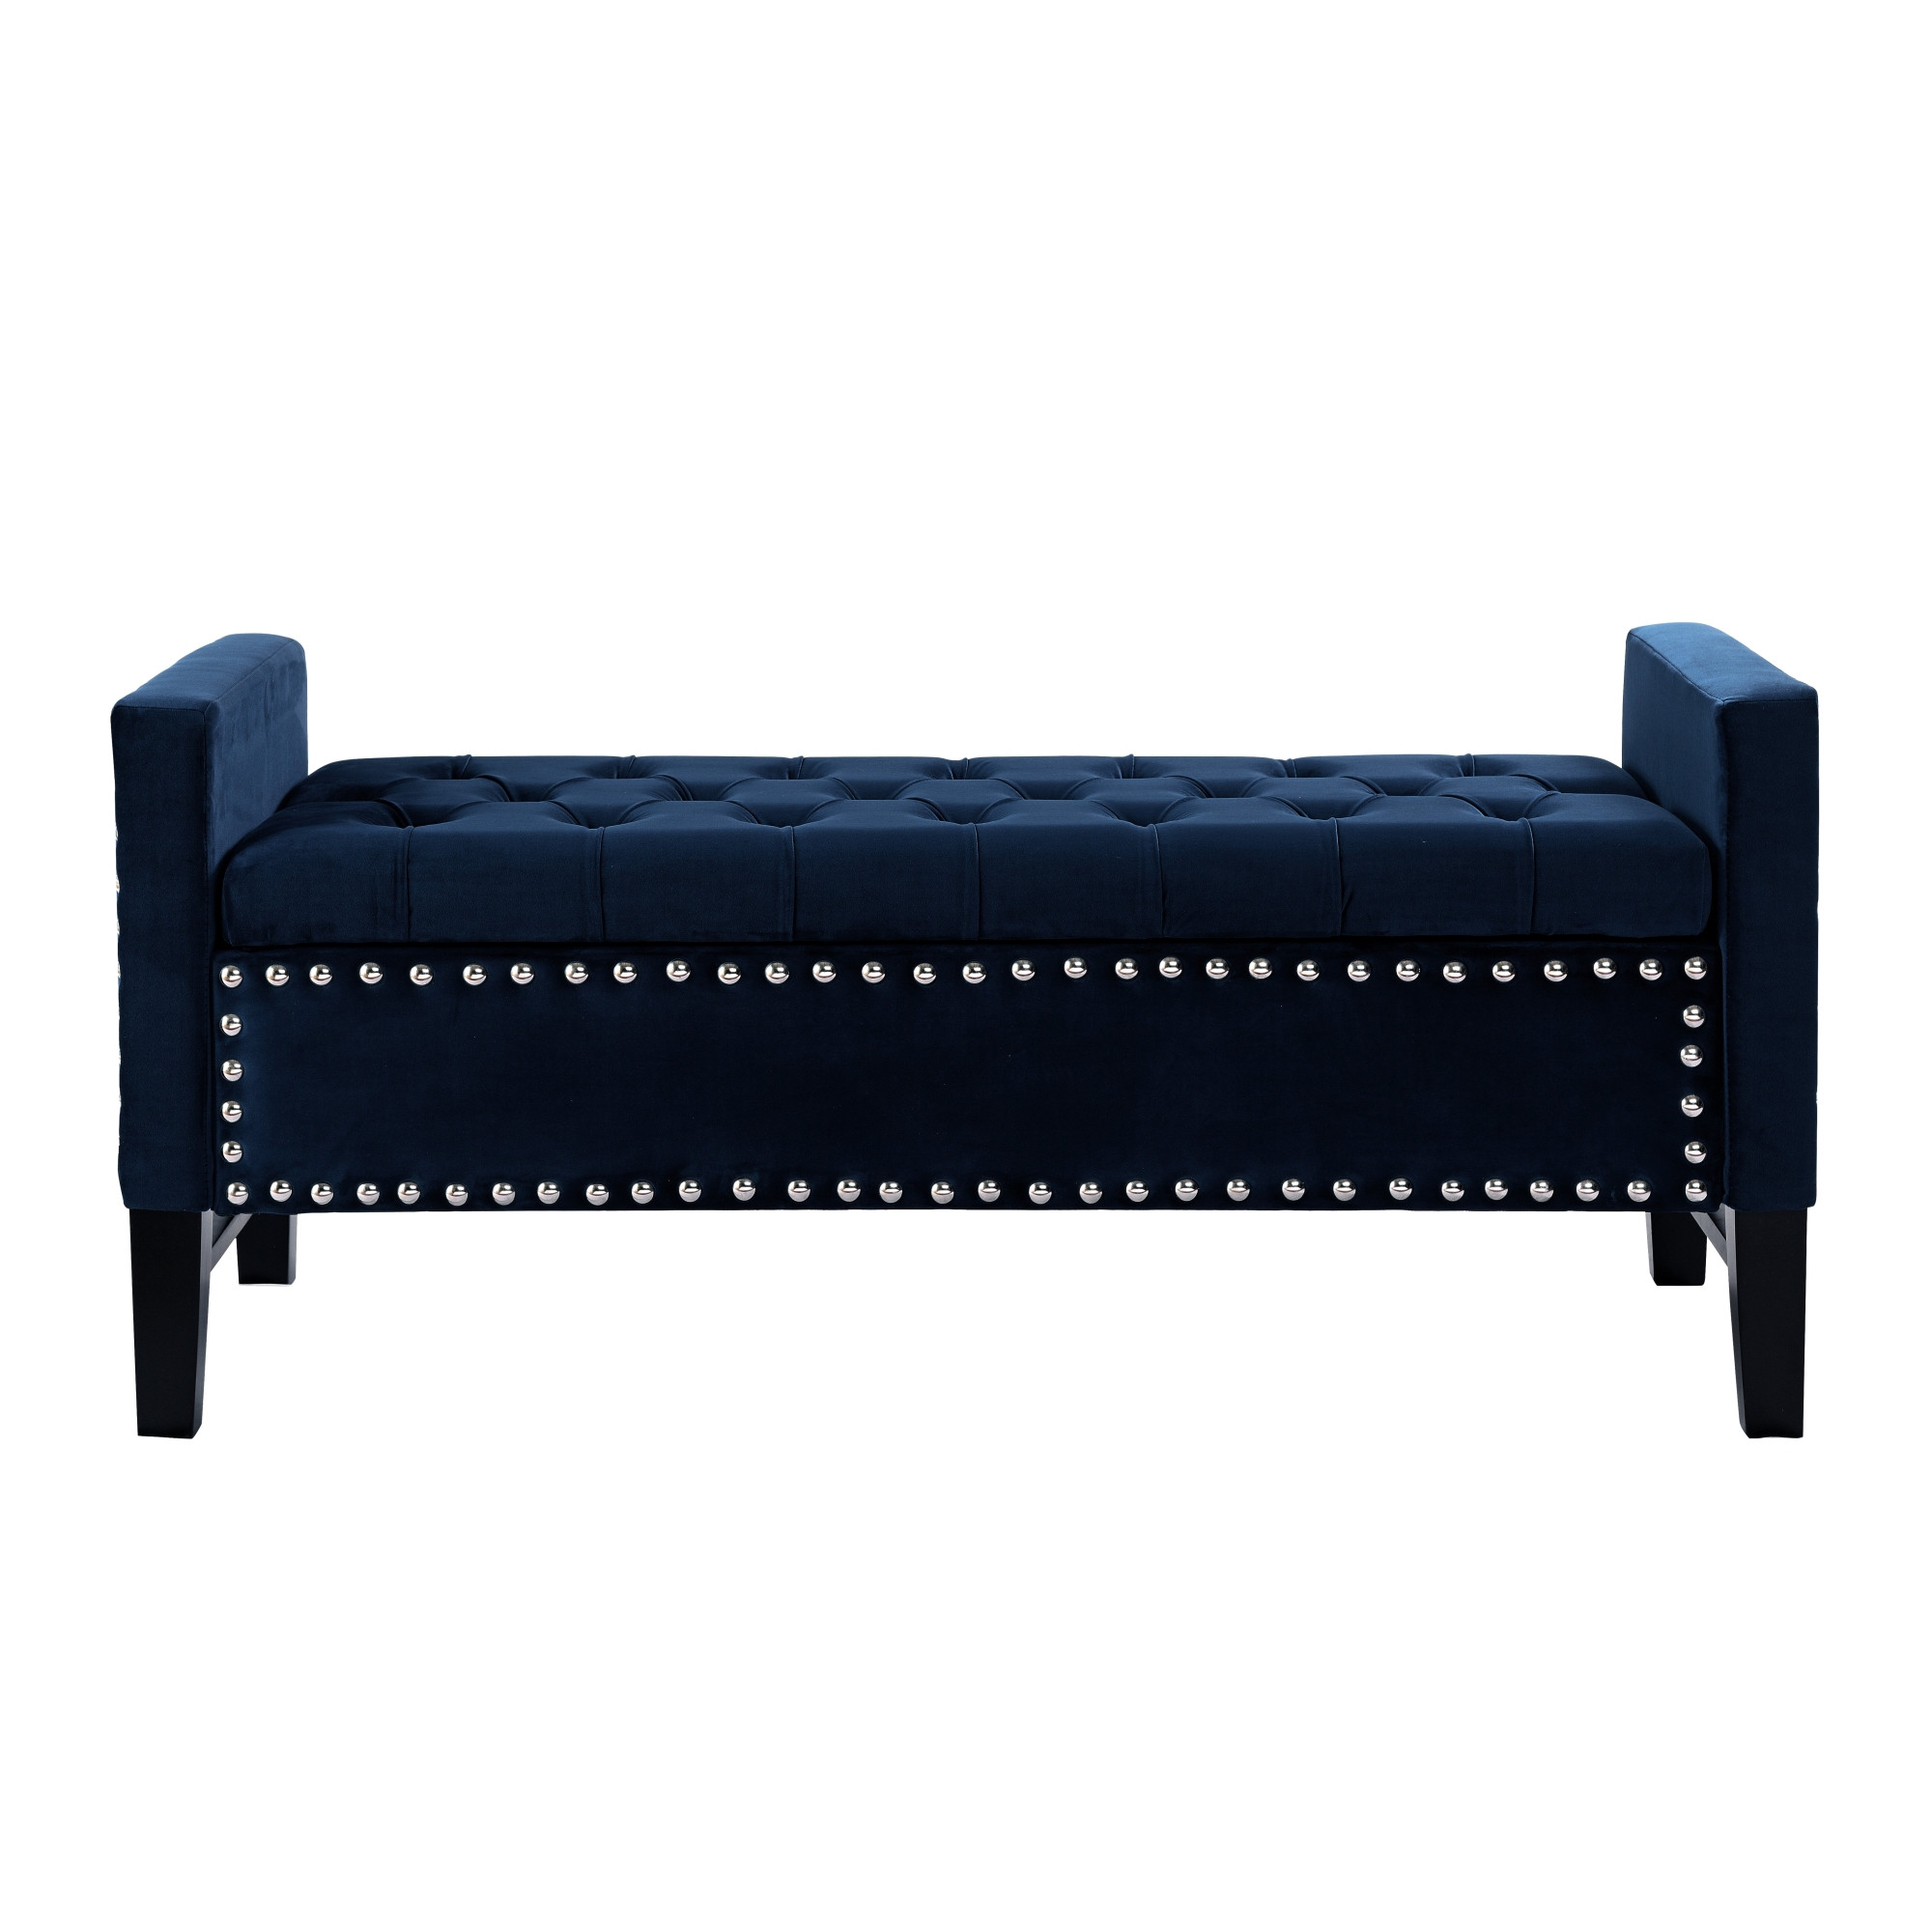 50" Navy Blue and Black Upholstered Velvet Bench with Flip top, Shoe Storage-530656-1